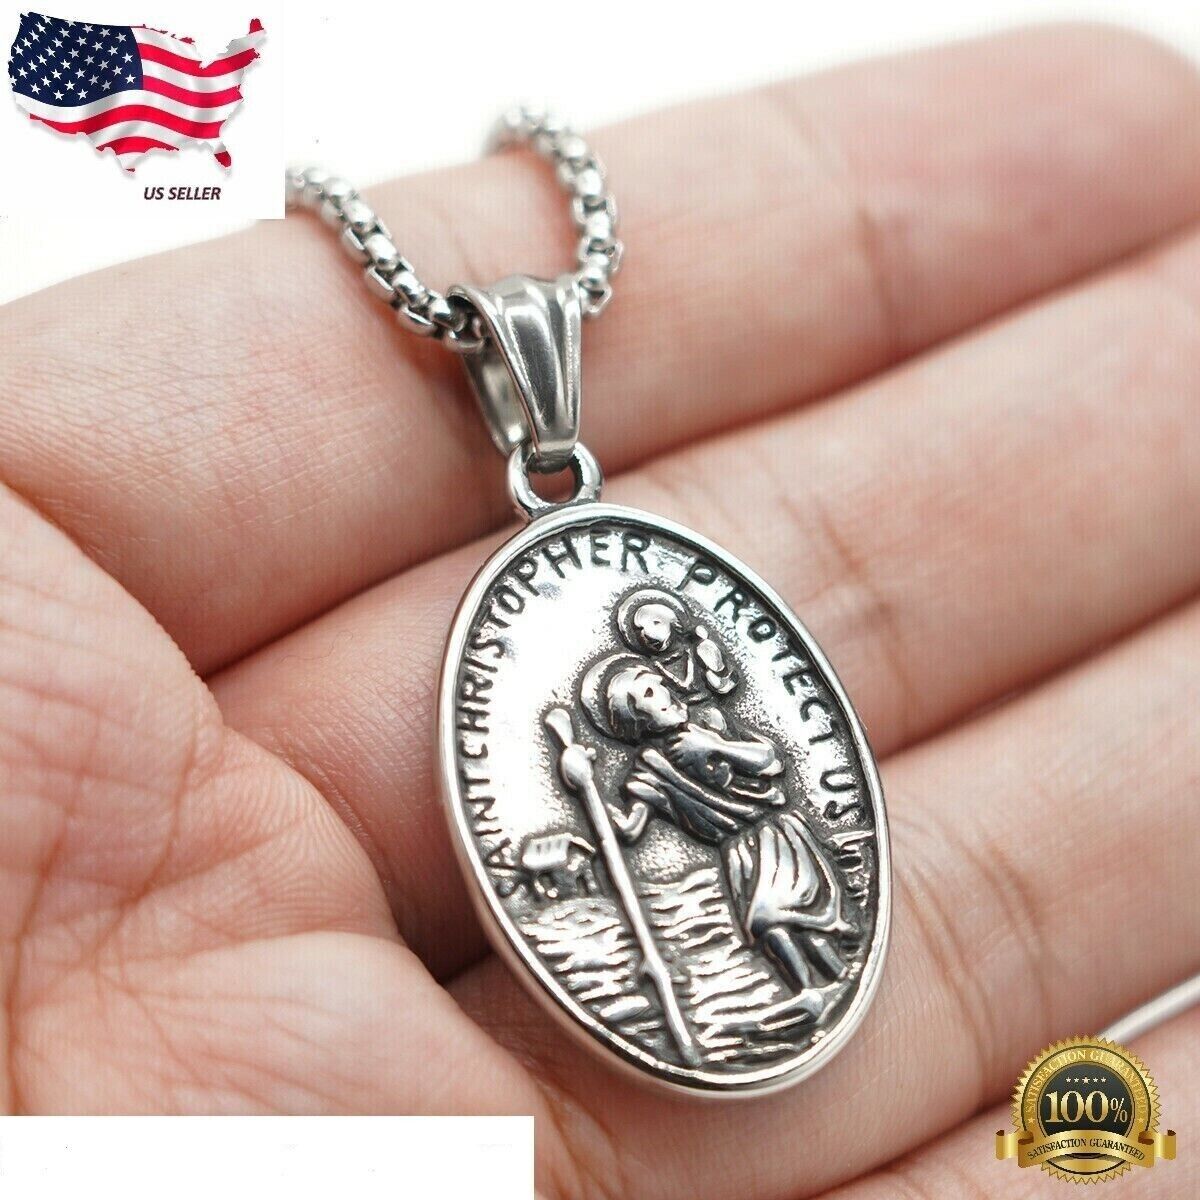 MENDEL Mens St Saint Christopher Medal Pendant Necklace Stainless Steel Amulet